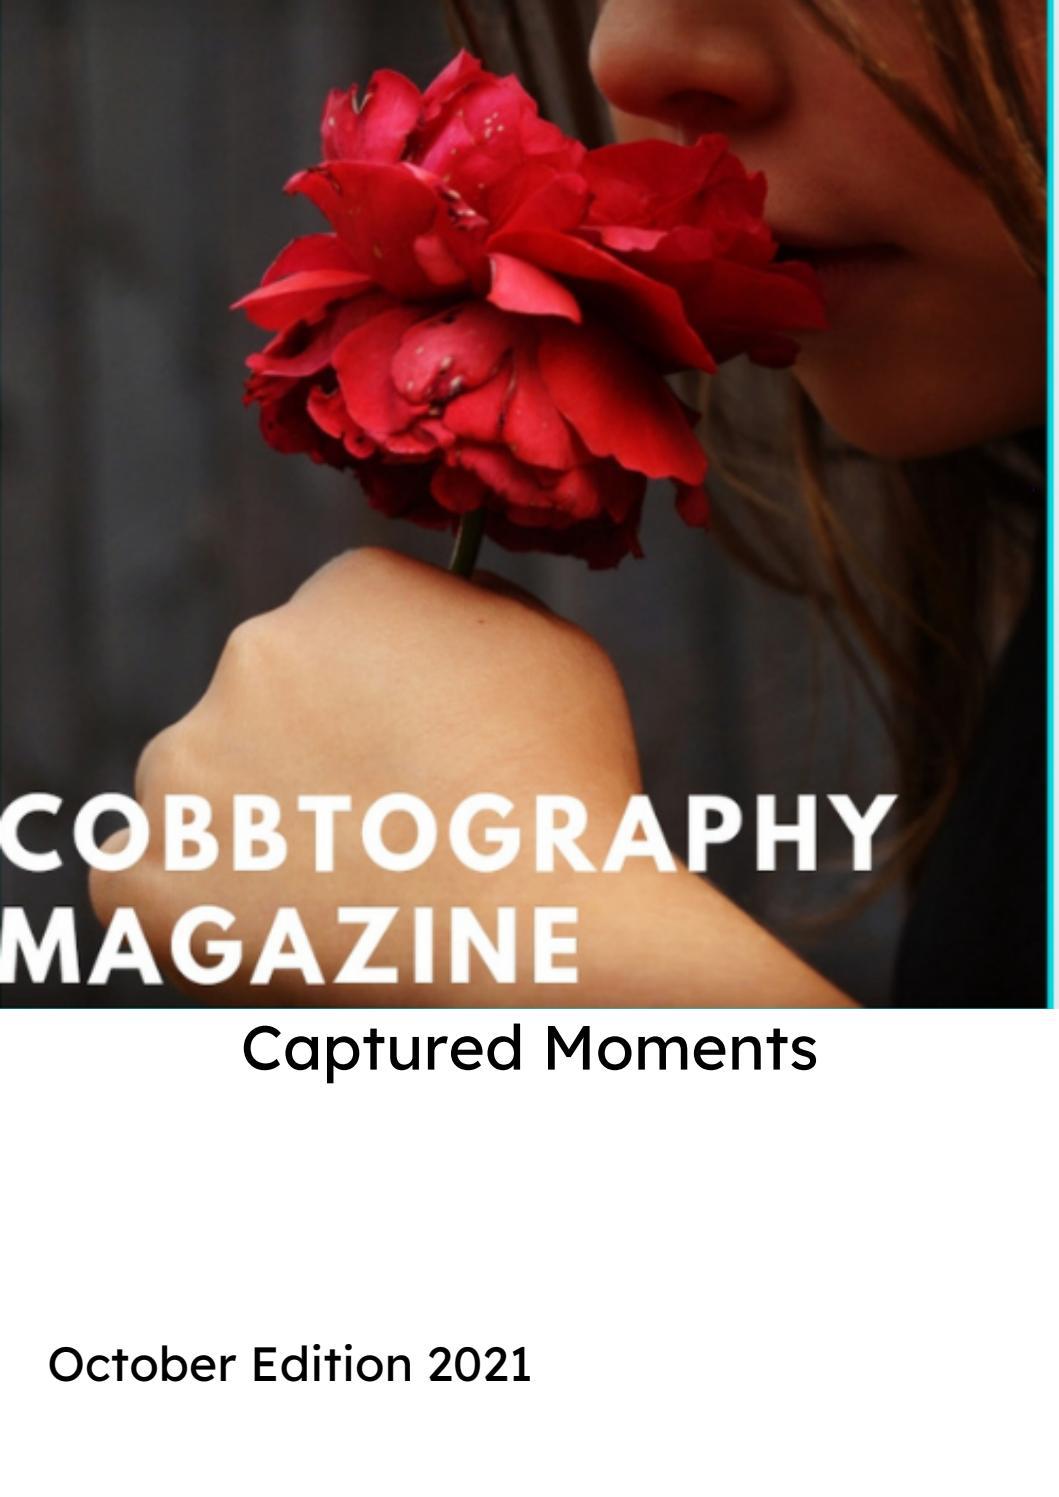 Cobbtography Magazine October Edition 2021